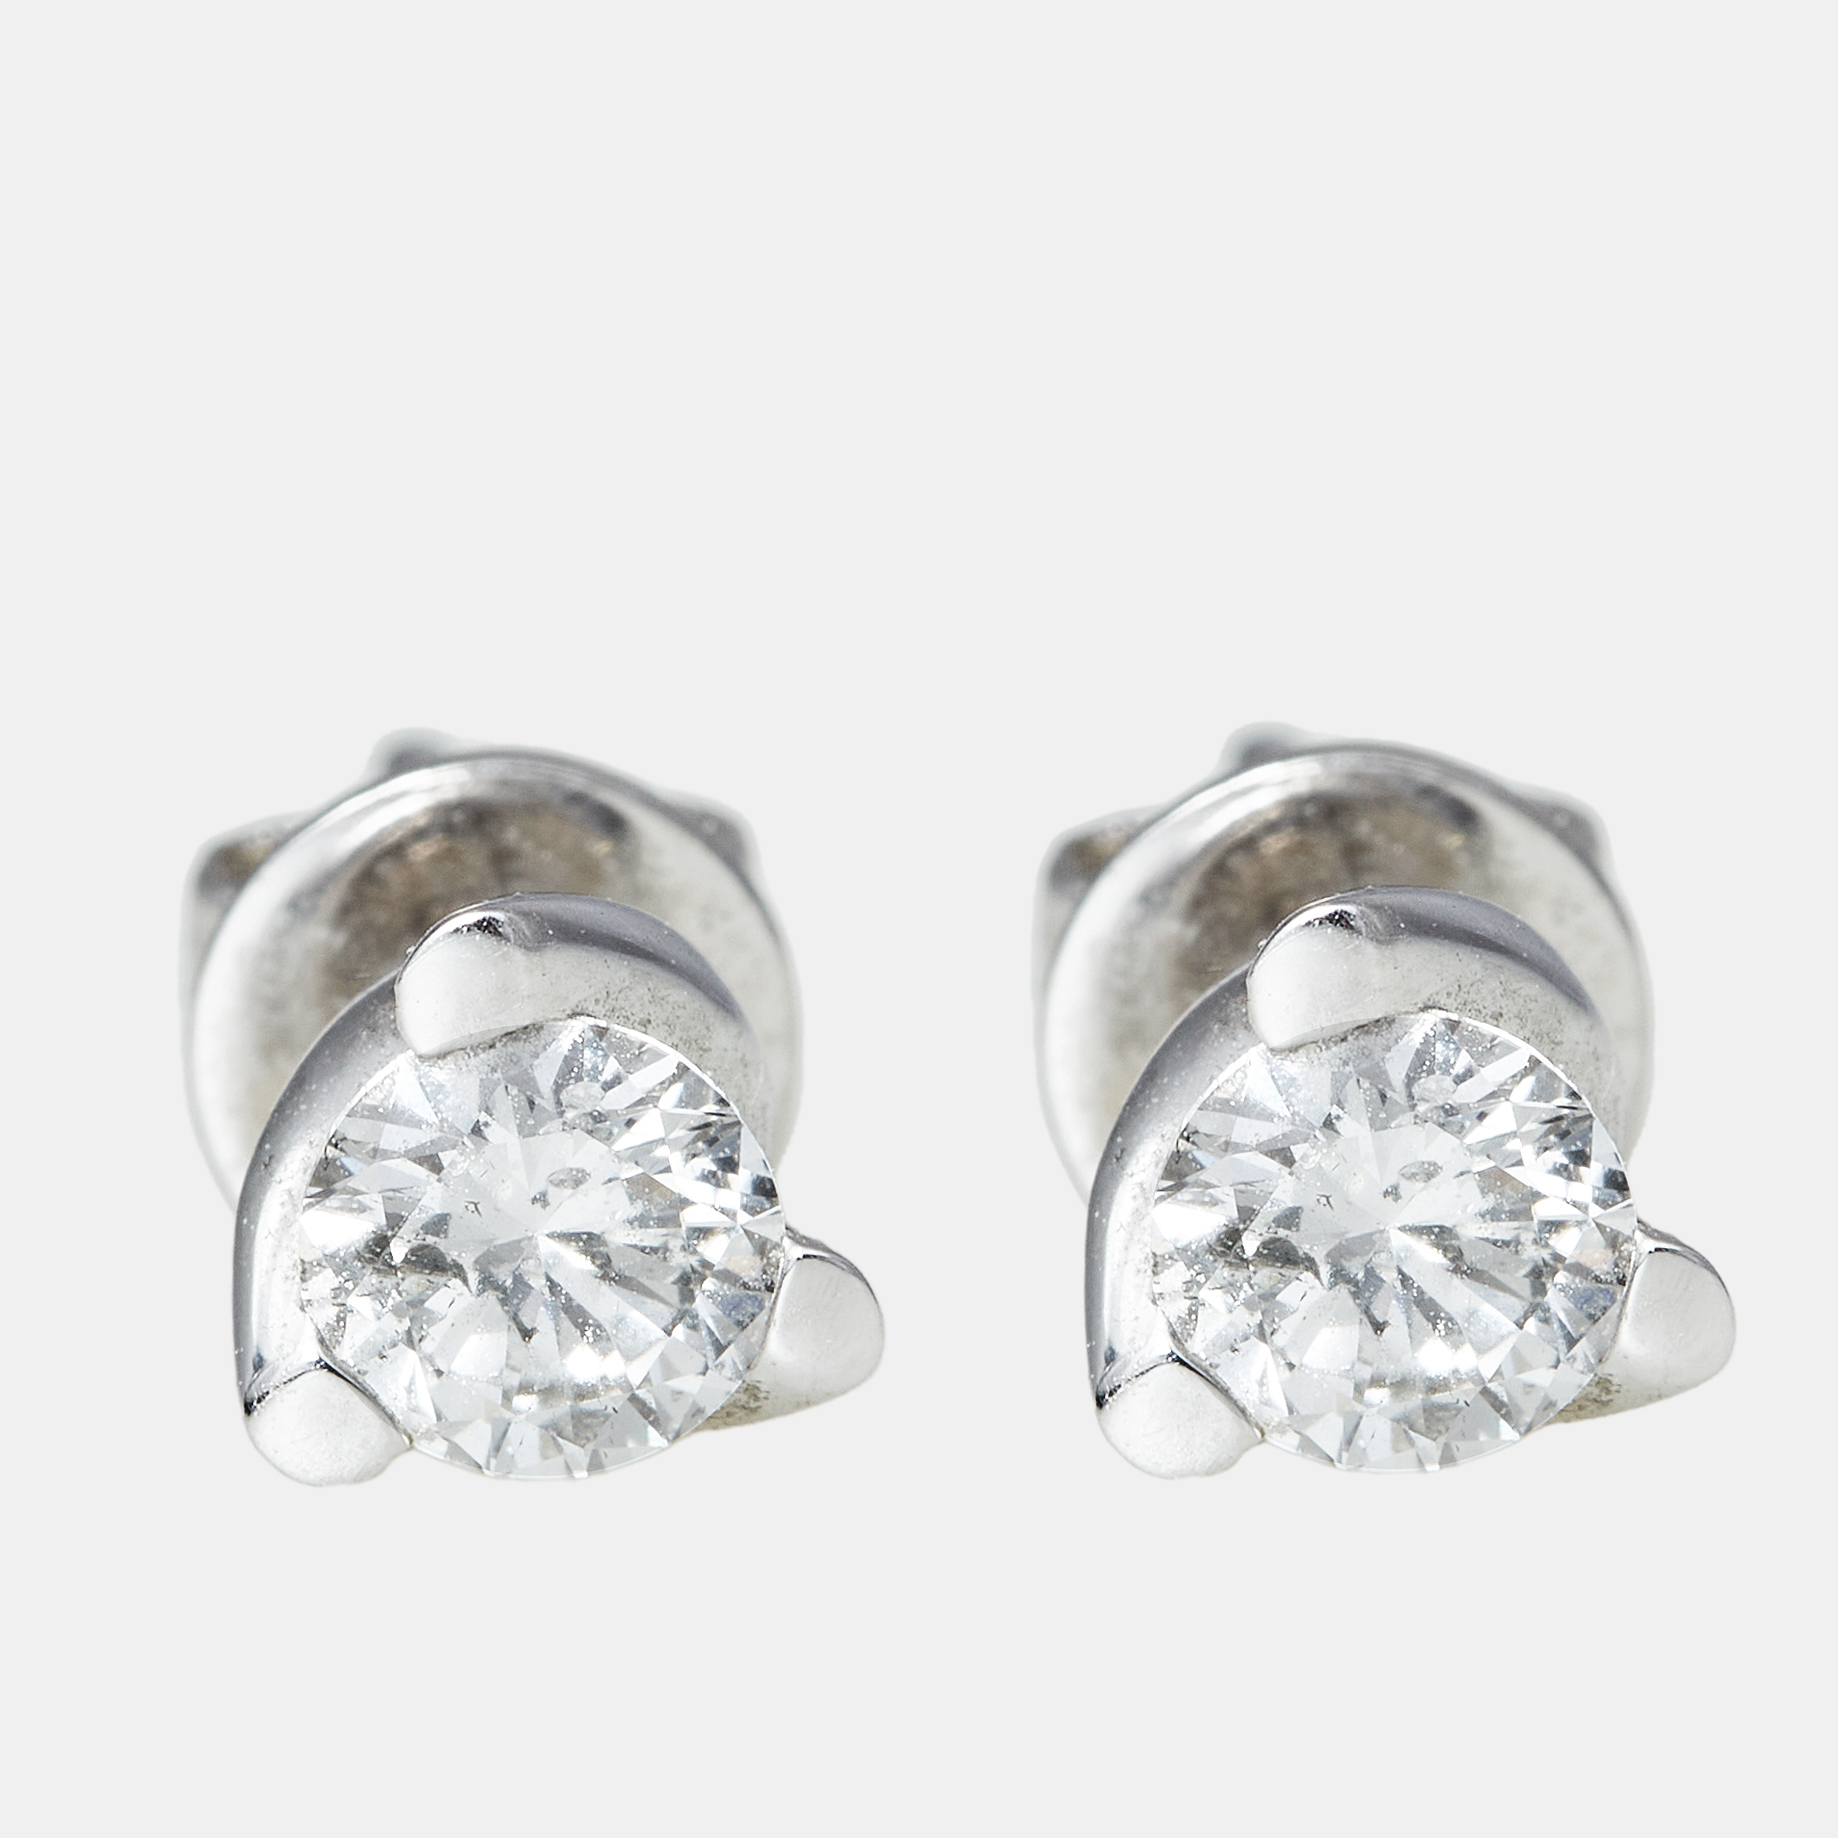 The diamond edit 18k white gold 0.77 ct diamond earrings